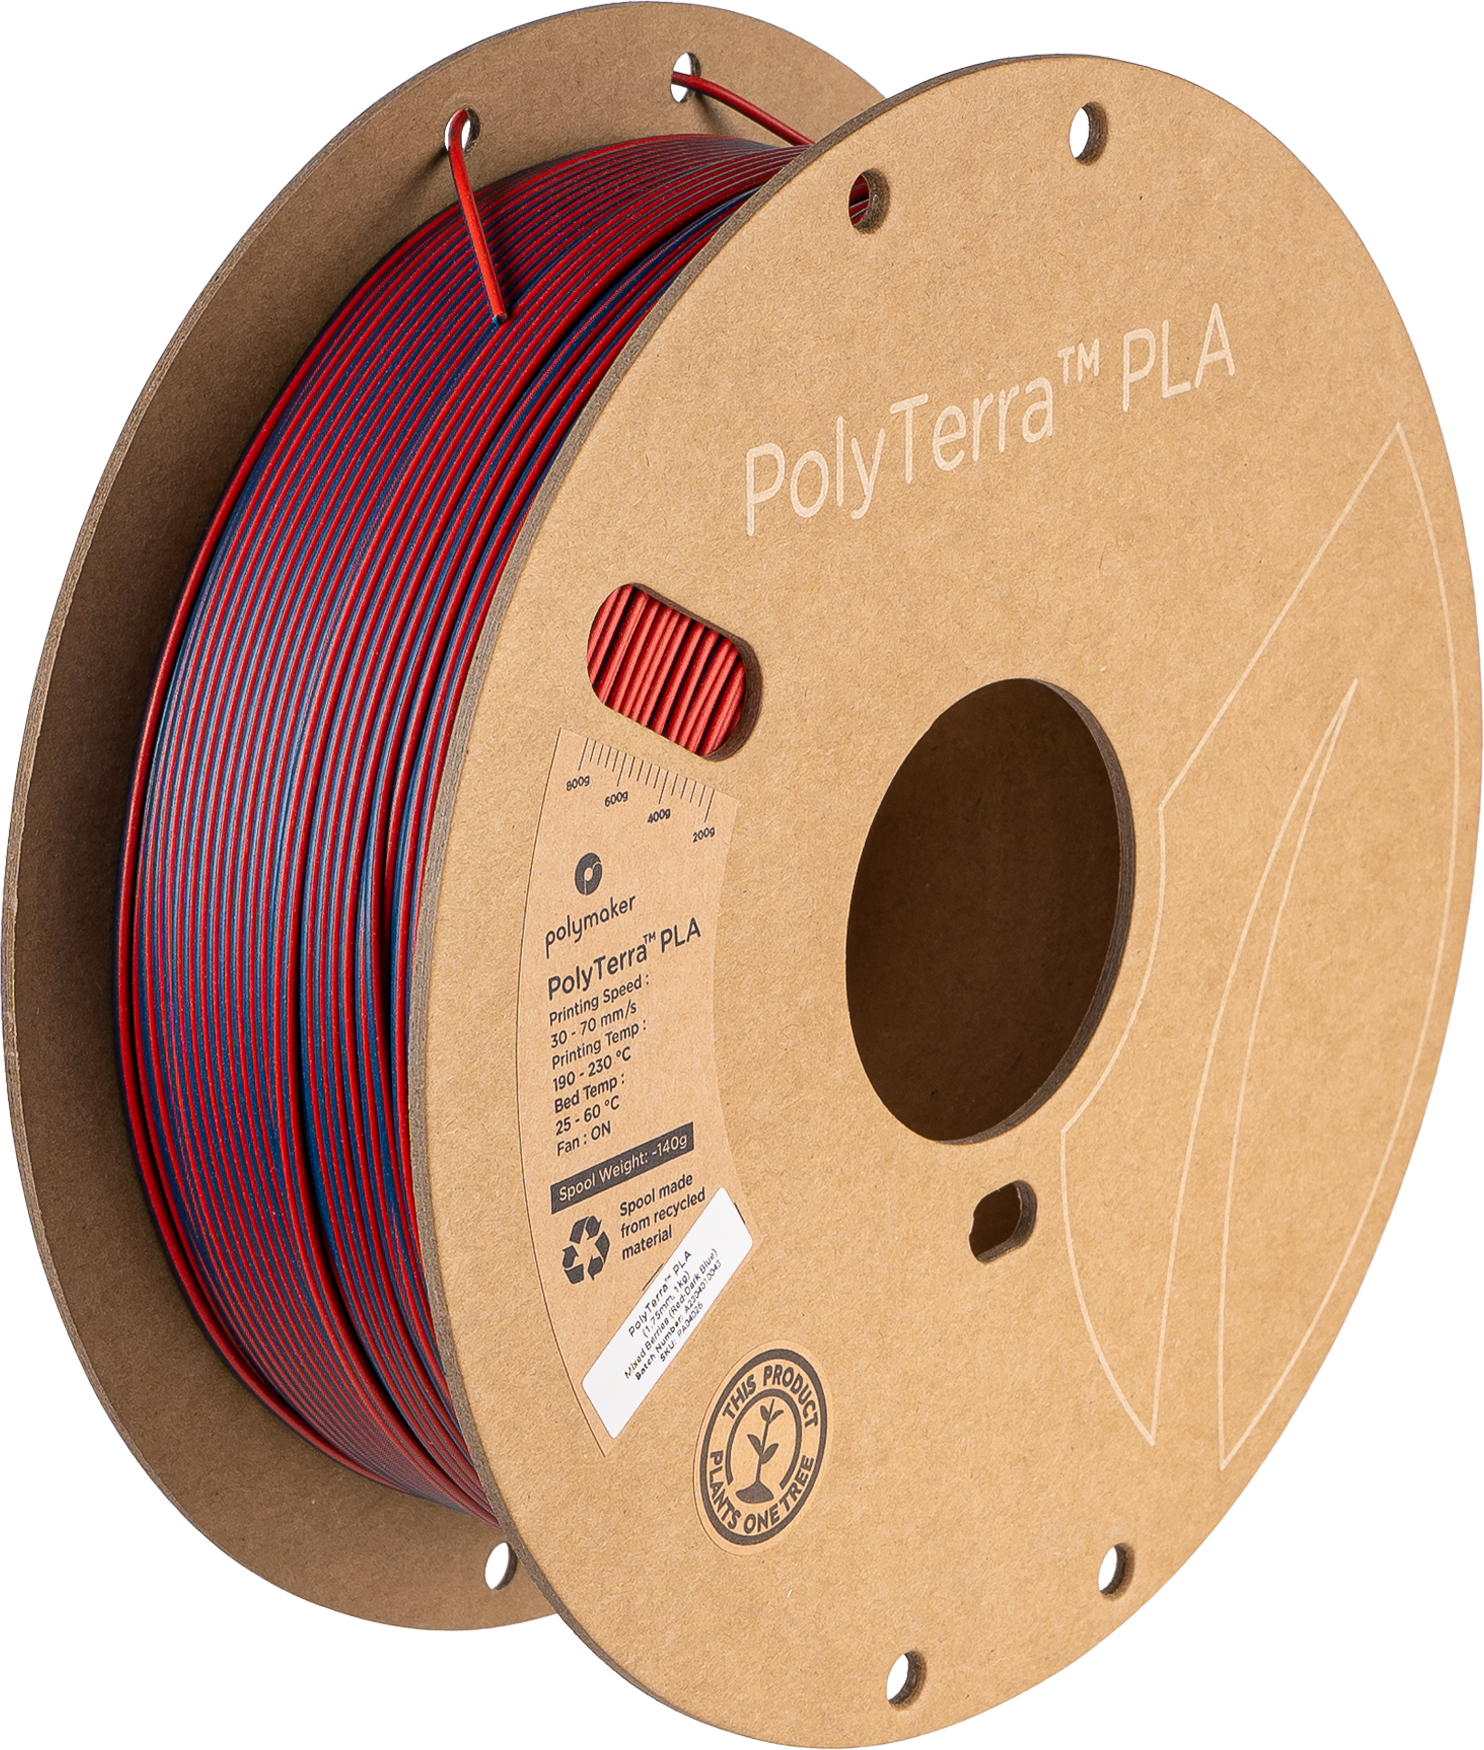 Polymaker - PolyTerra PLA Dual - Mixed Berries (Red-Dark Blue) - 1.75mm - 1kg